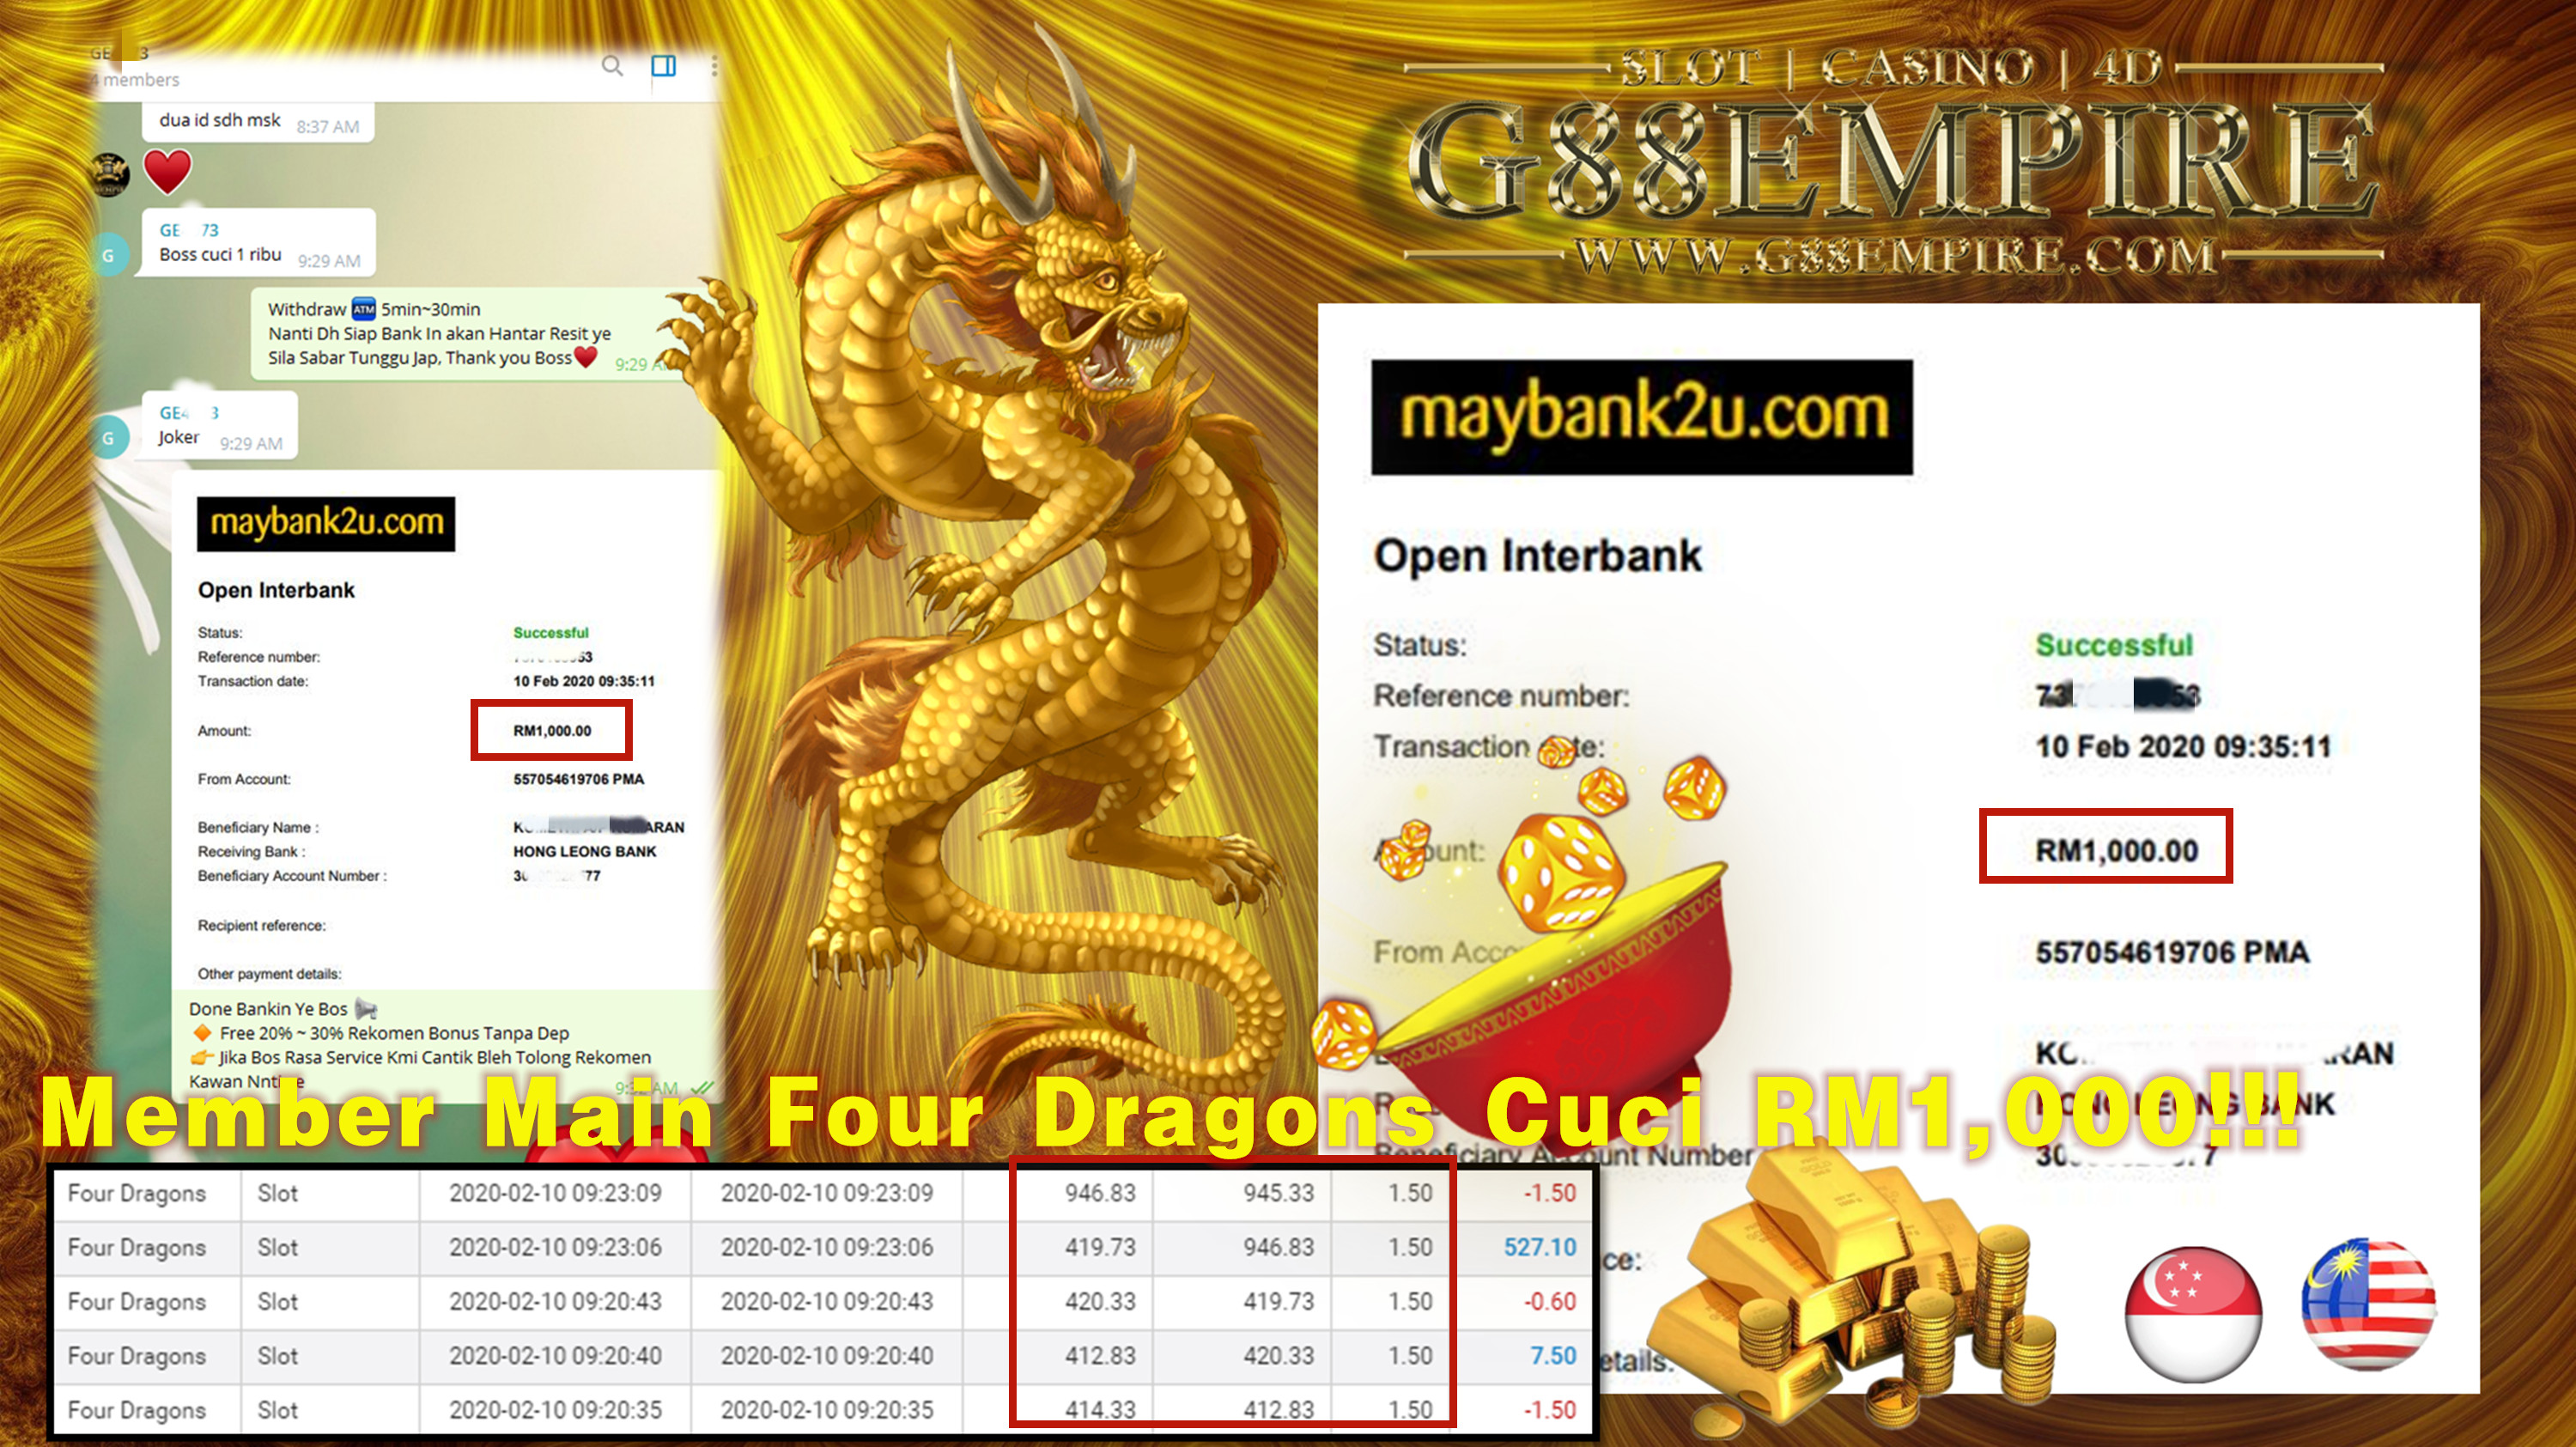 MEMBER MAIN FOUR DRAGONS CUCI RM1,000!!!